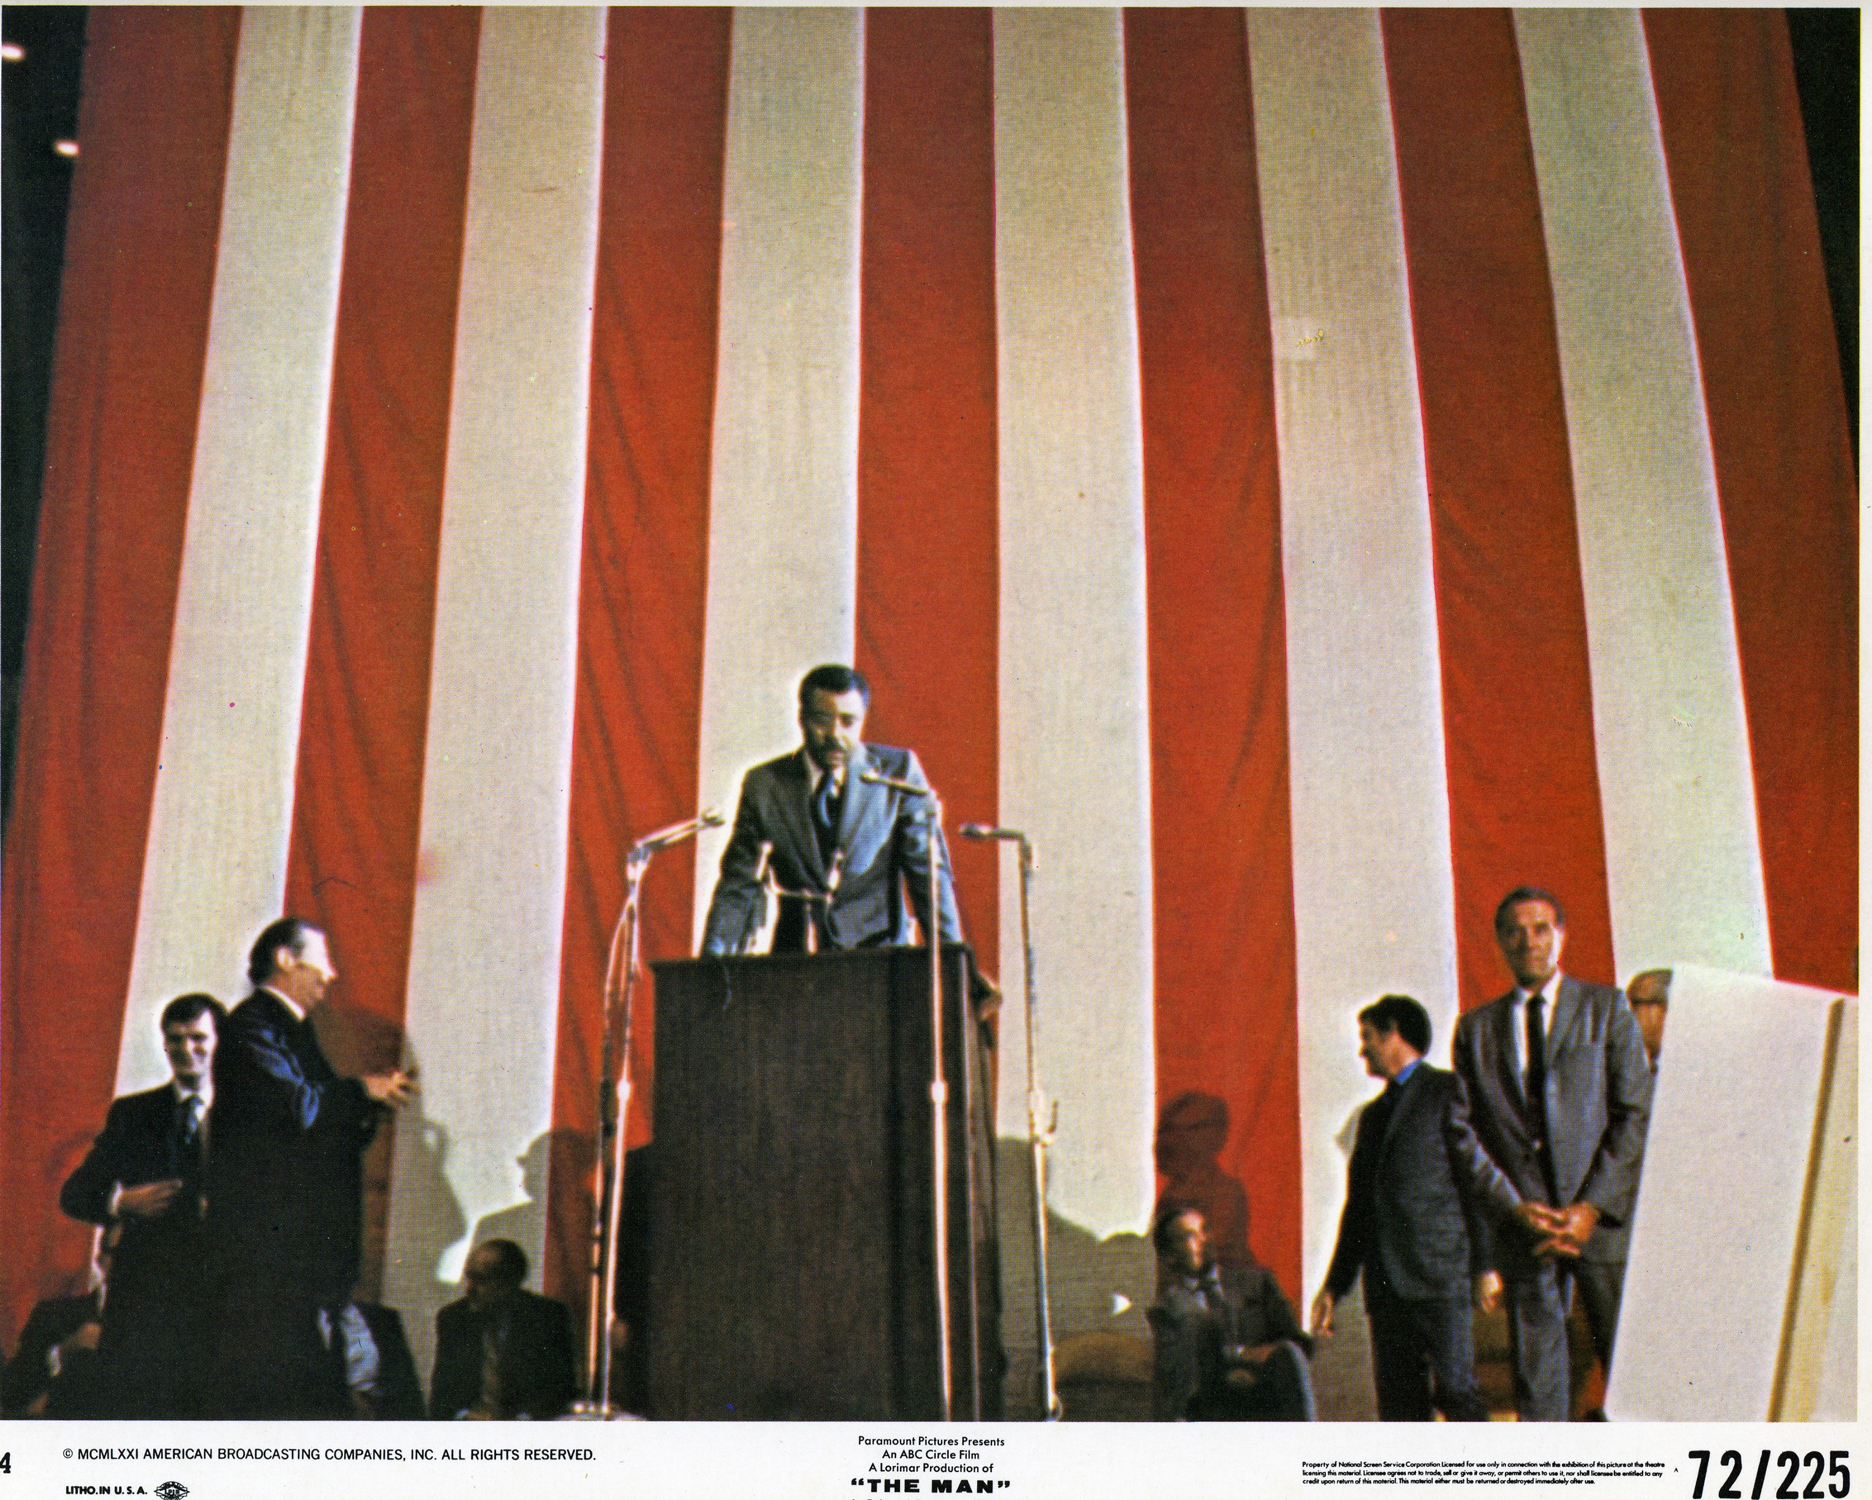  James Earl Jones, as “President Douglass Dilman”, at the podium. 